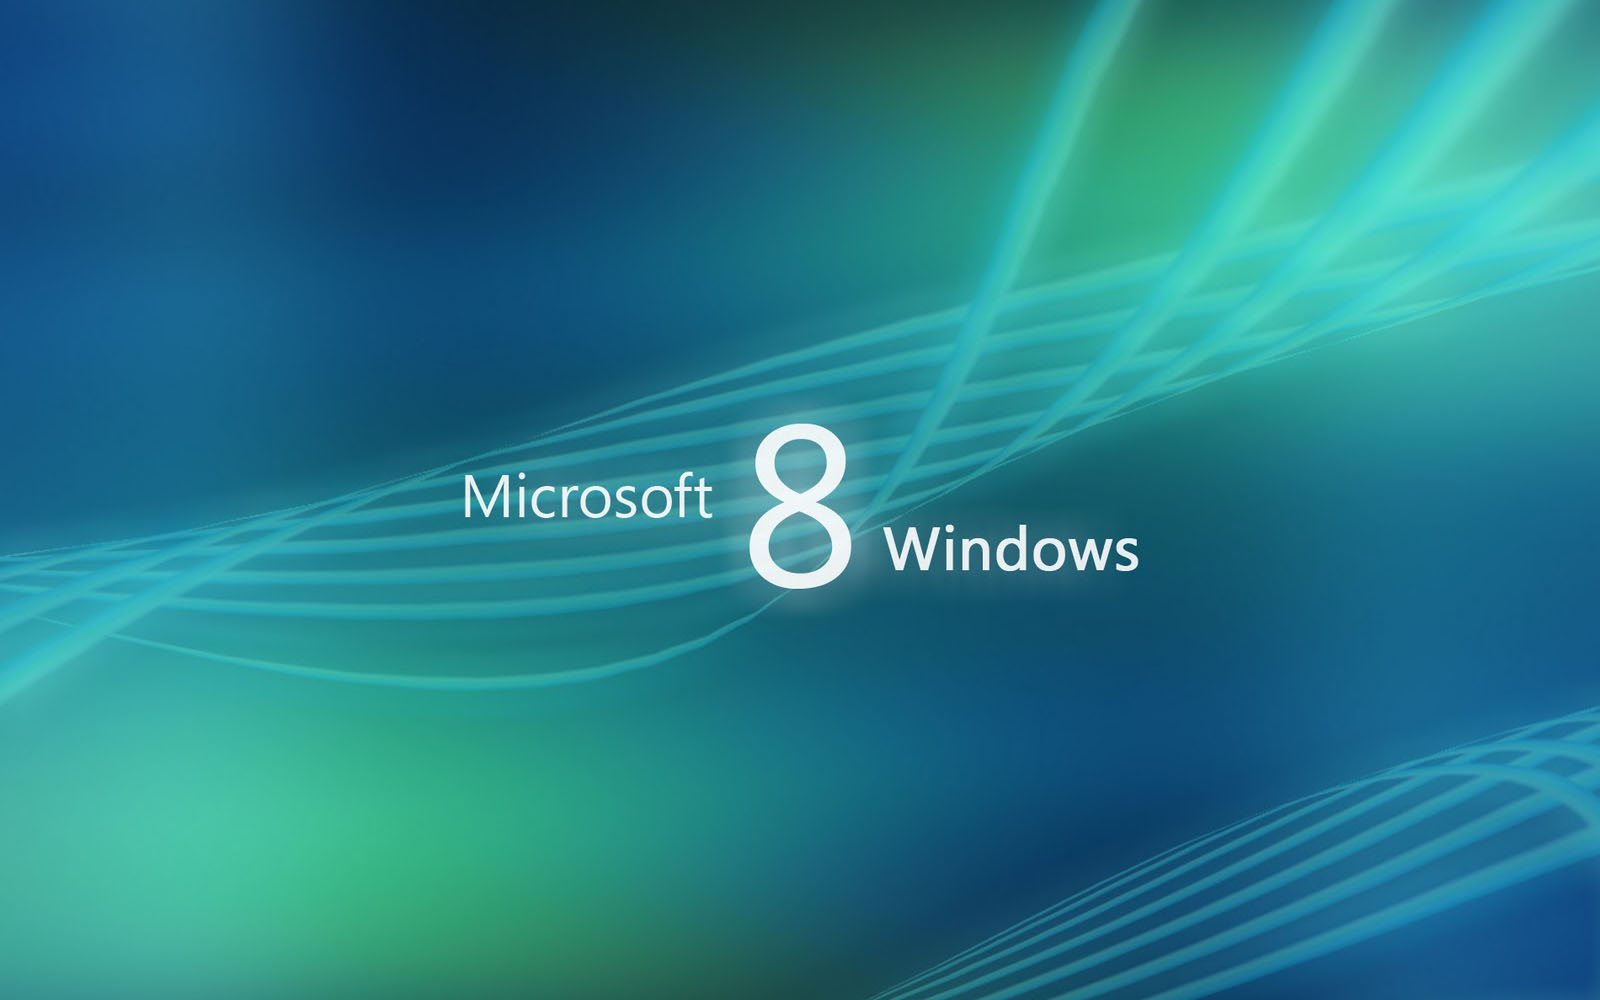 The Windows 8 Themes Windows 8 Latest Desktop Background Themes Free